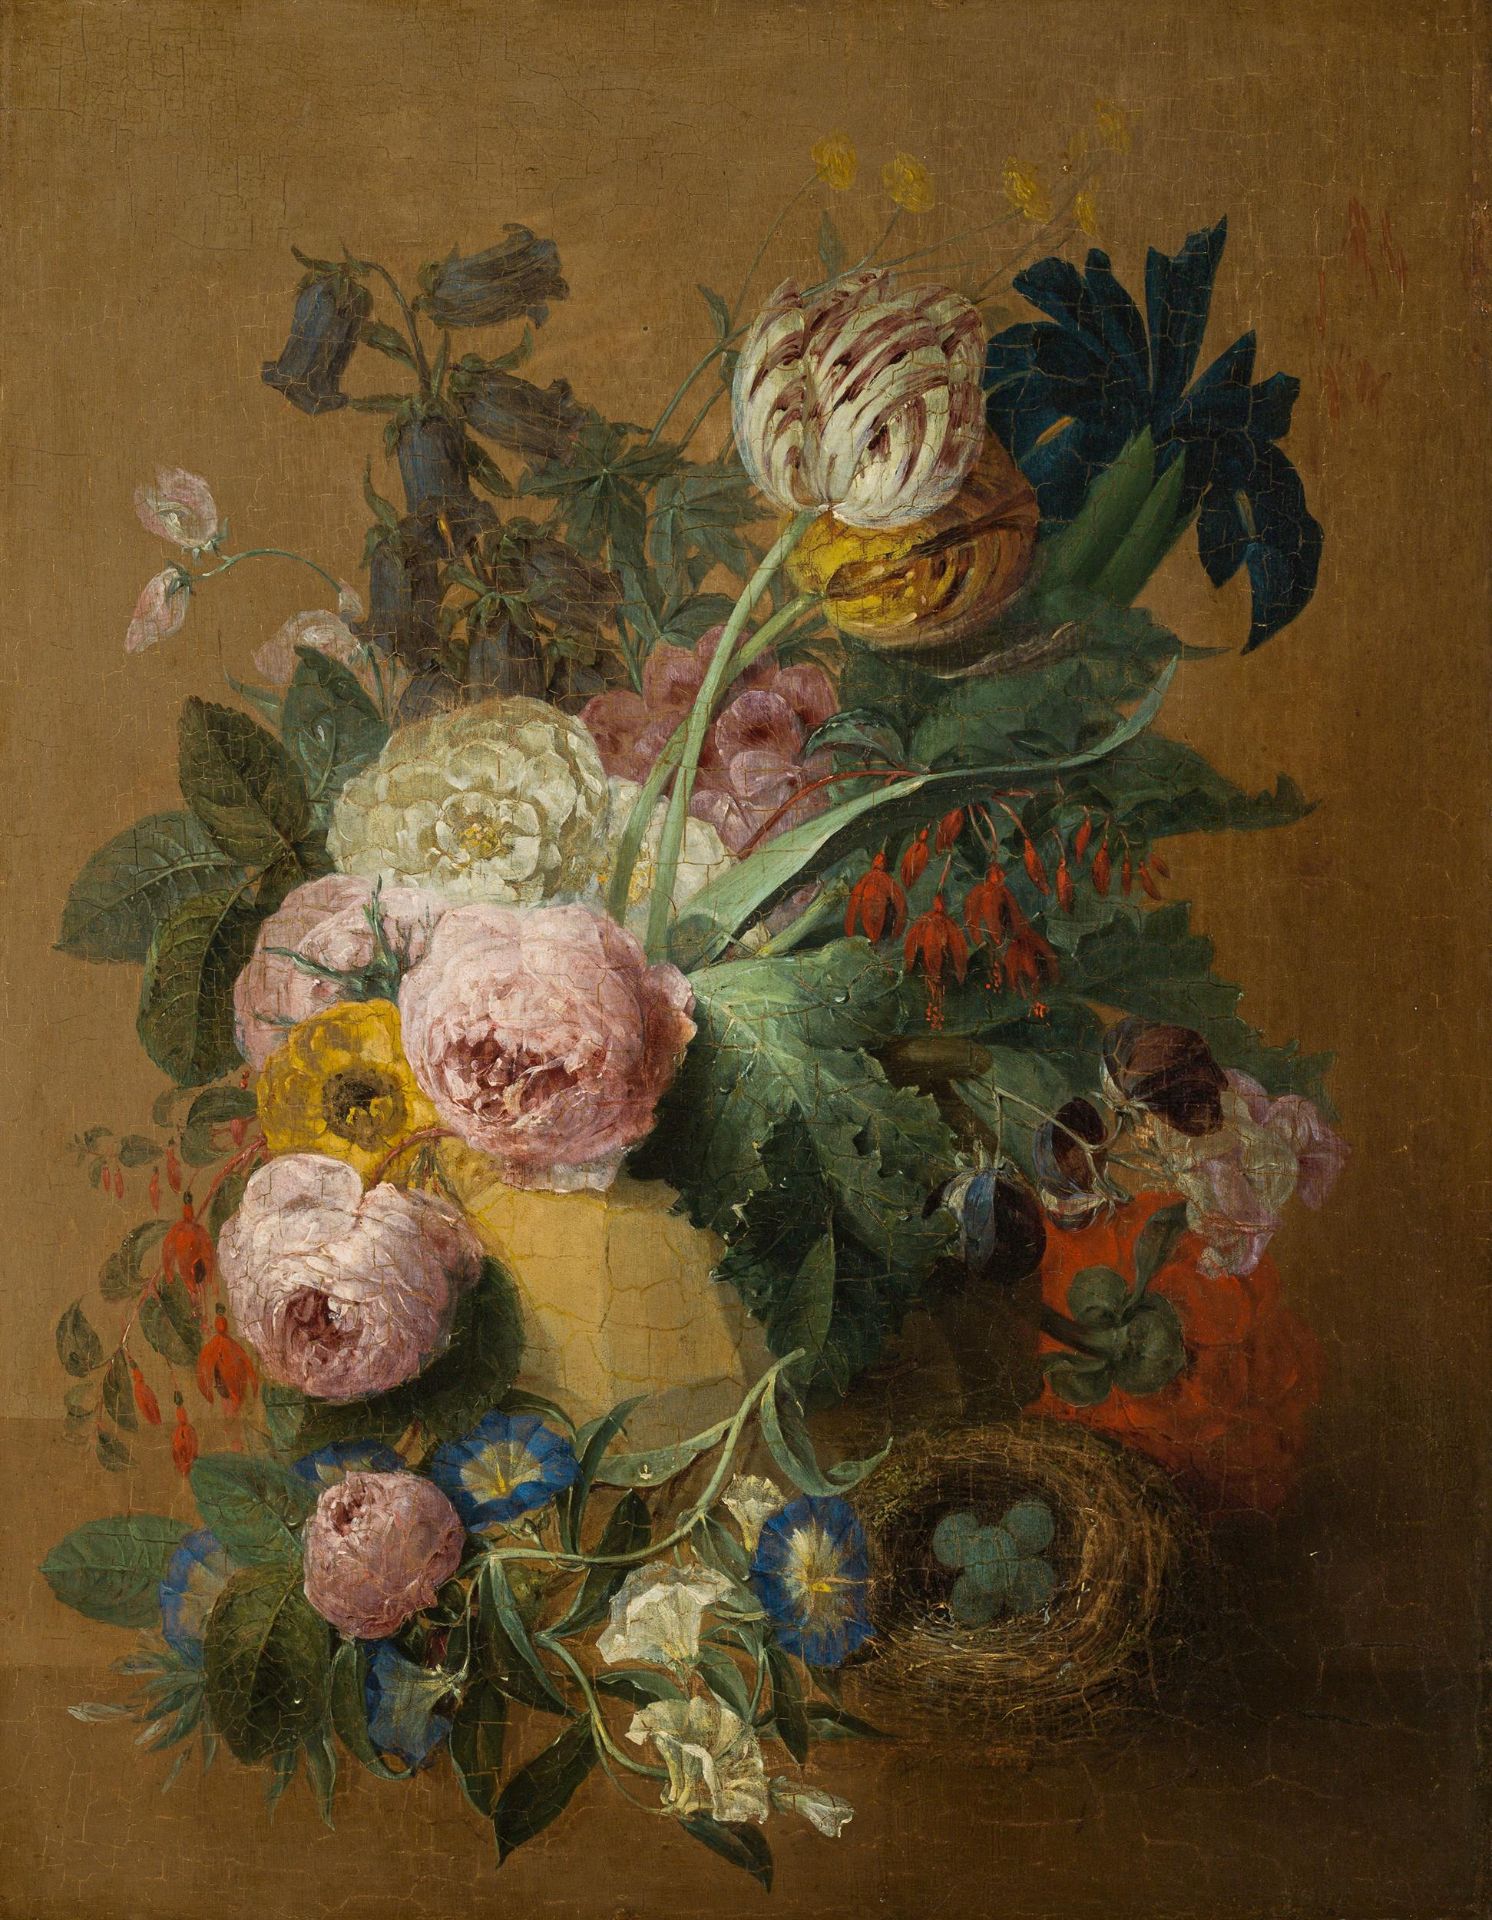 Artist of the 18th century: Floral still life